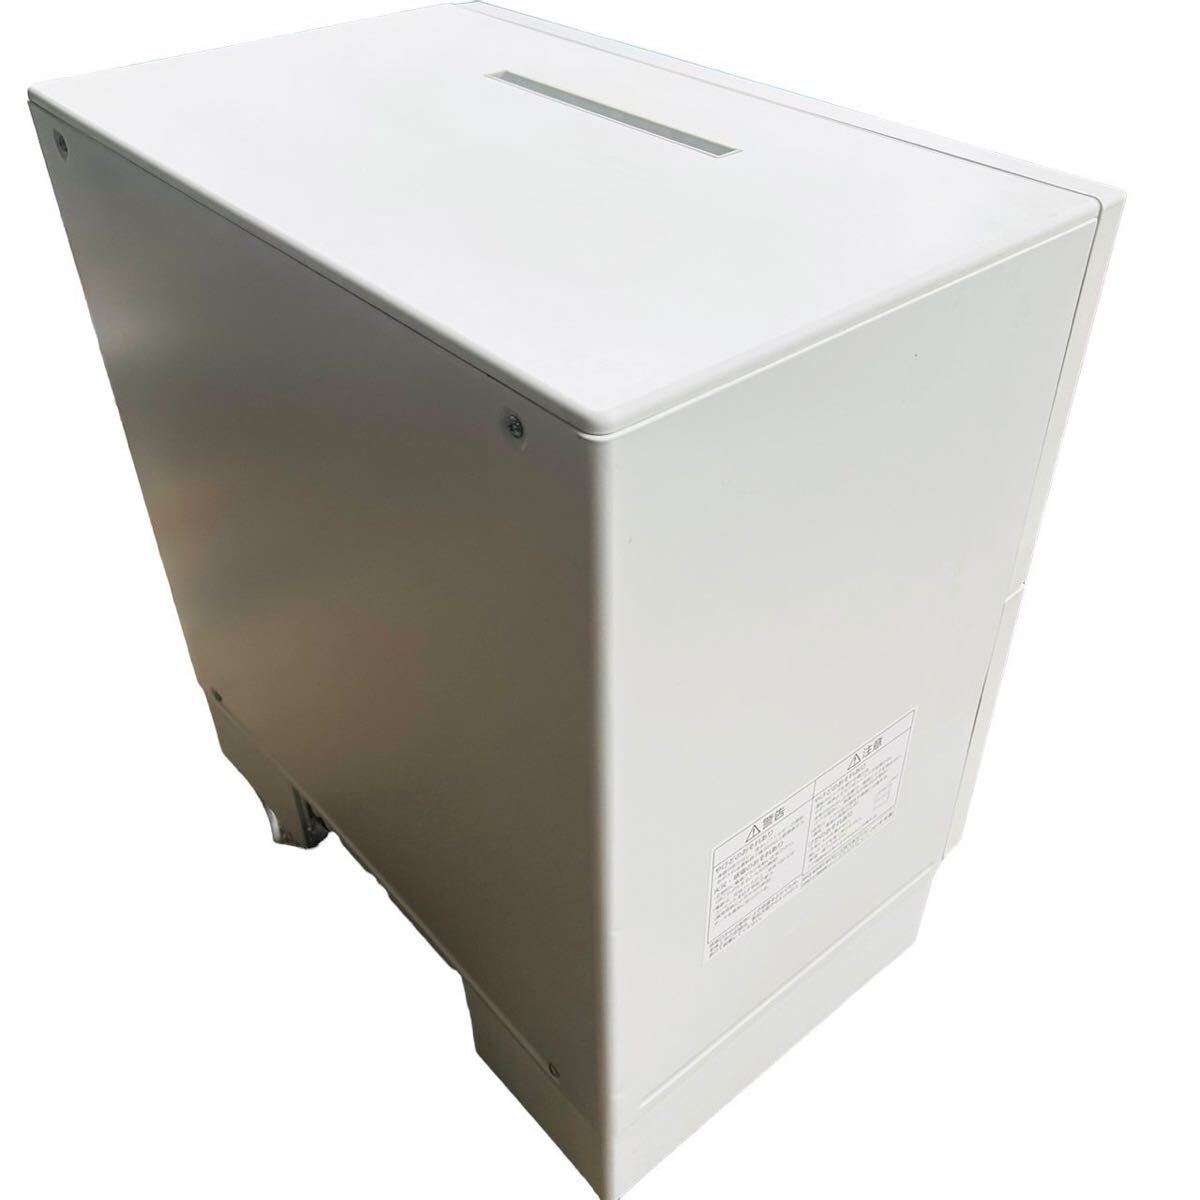 ★ Panasonic パナソニック 電気食器洗い乾燥機 2018年 食洗機 乾燥機 ホワイト NP-TH2 食洗器 家電_画像6